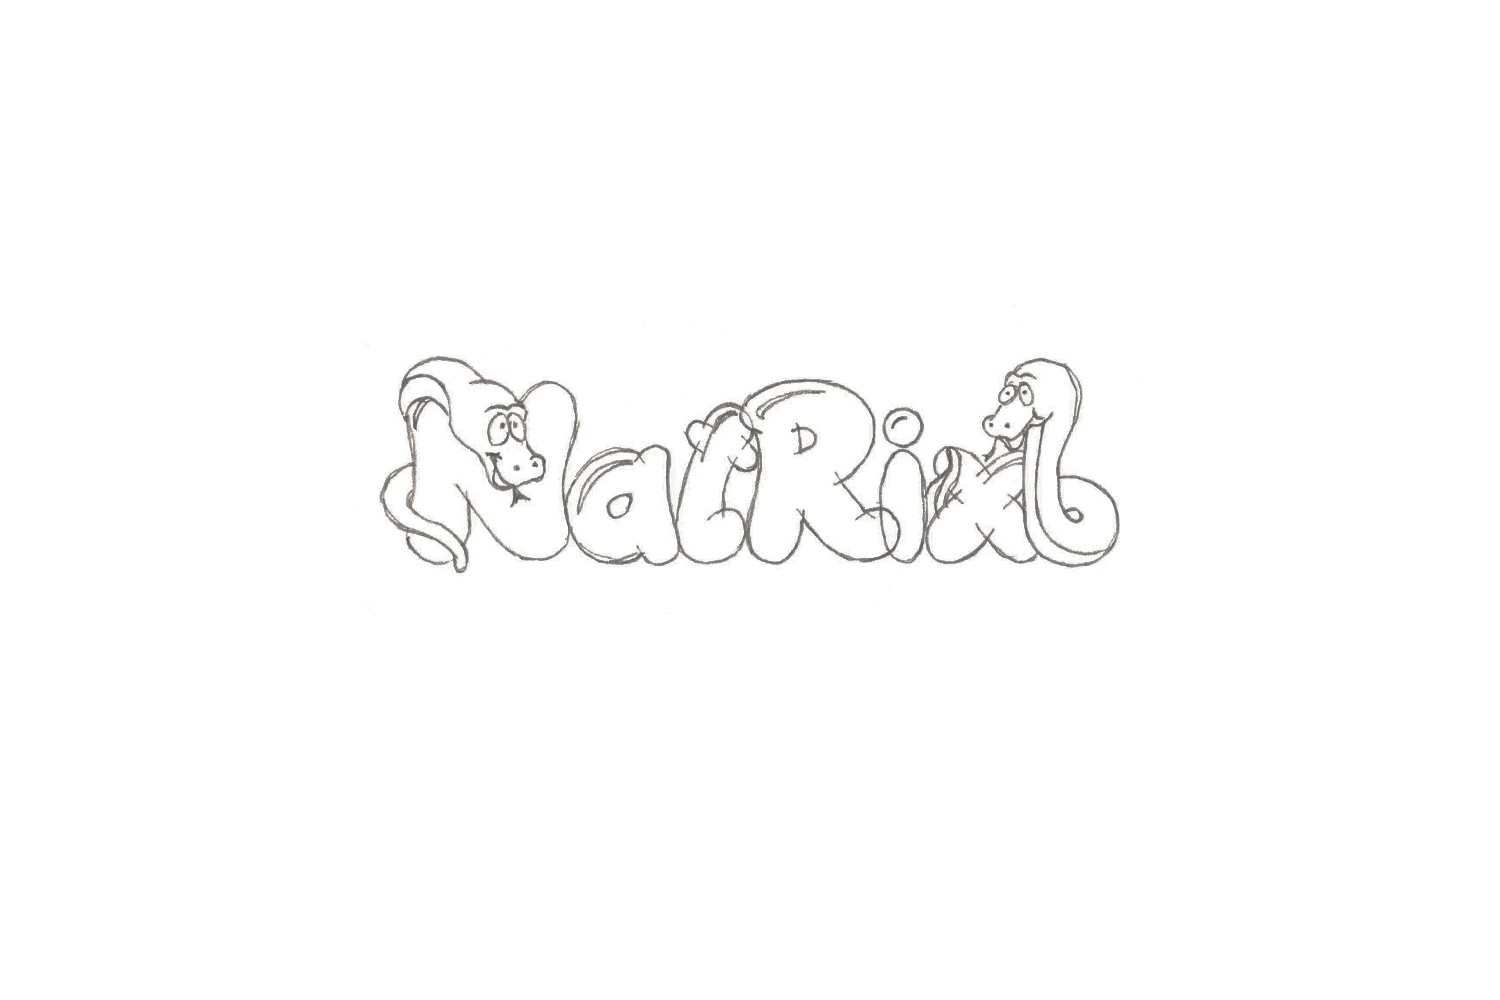 NATRIX swimming club logo concept pencil drawing